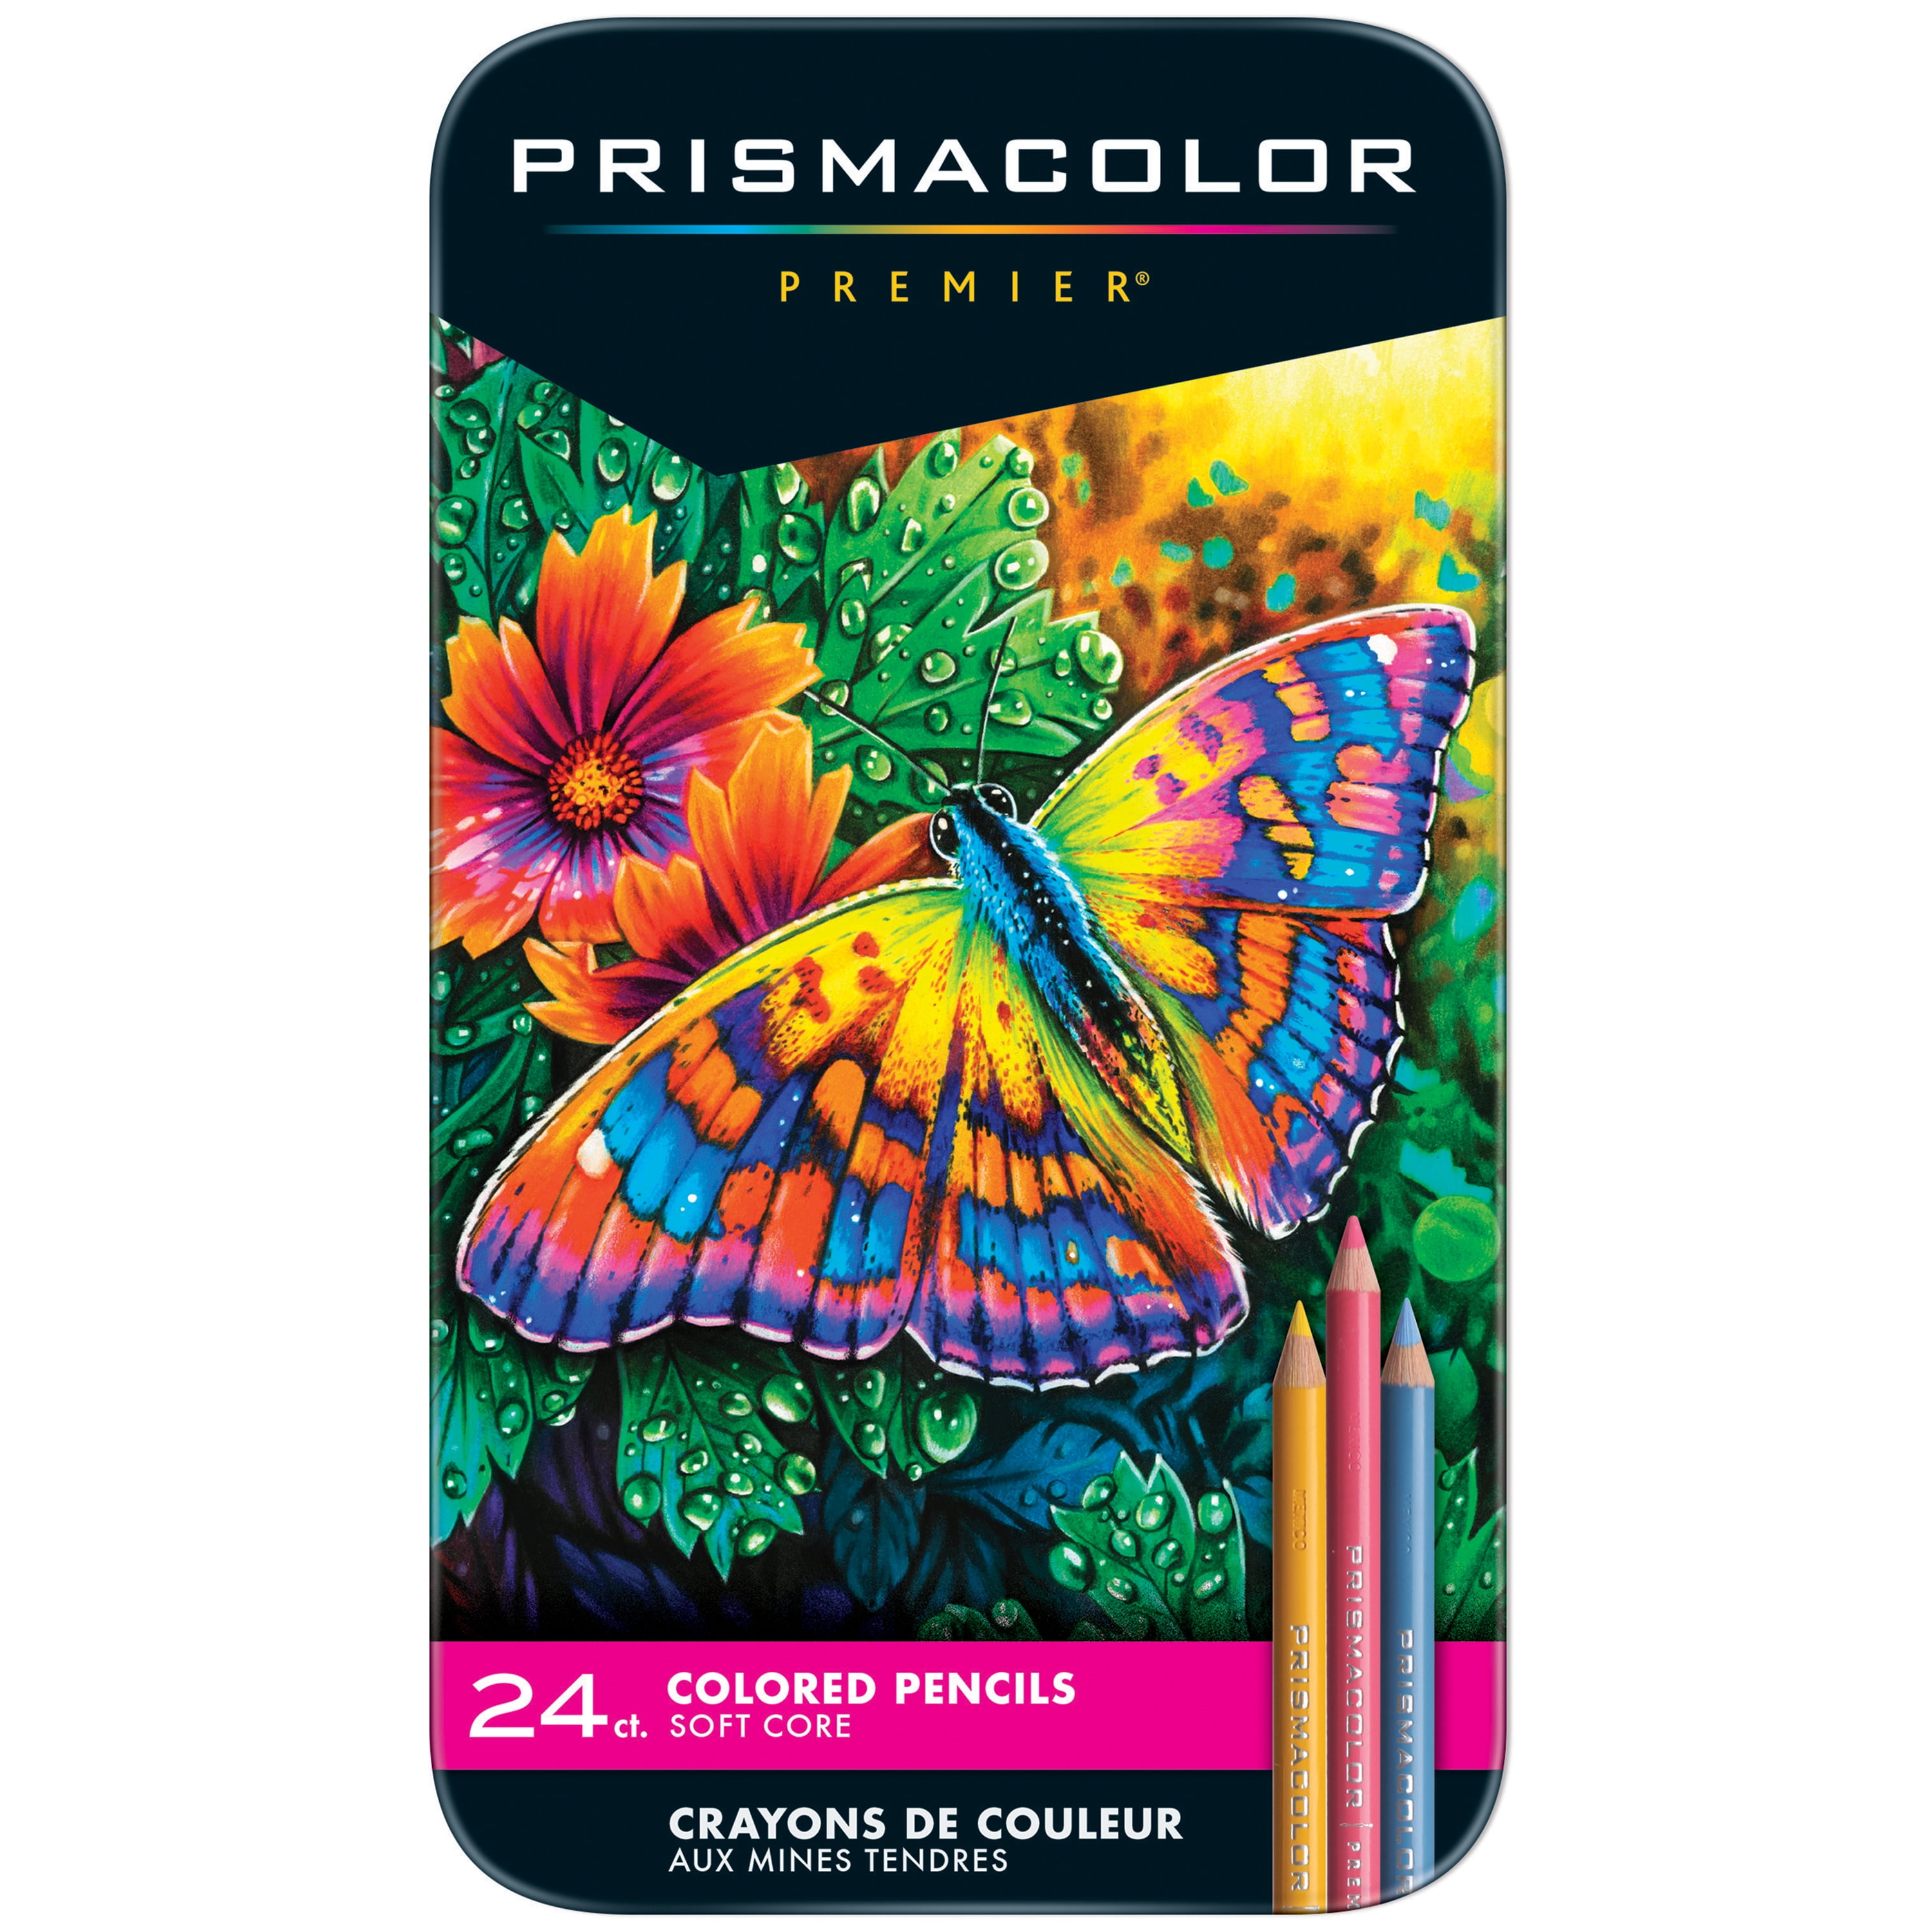 Super Tips for Blending Colored Pencils